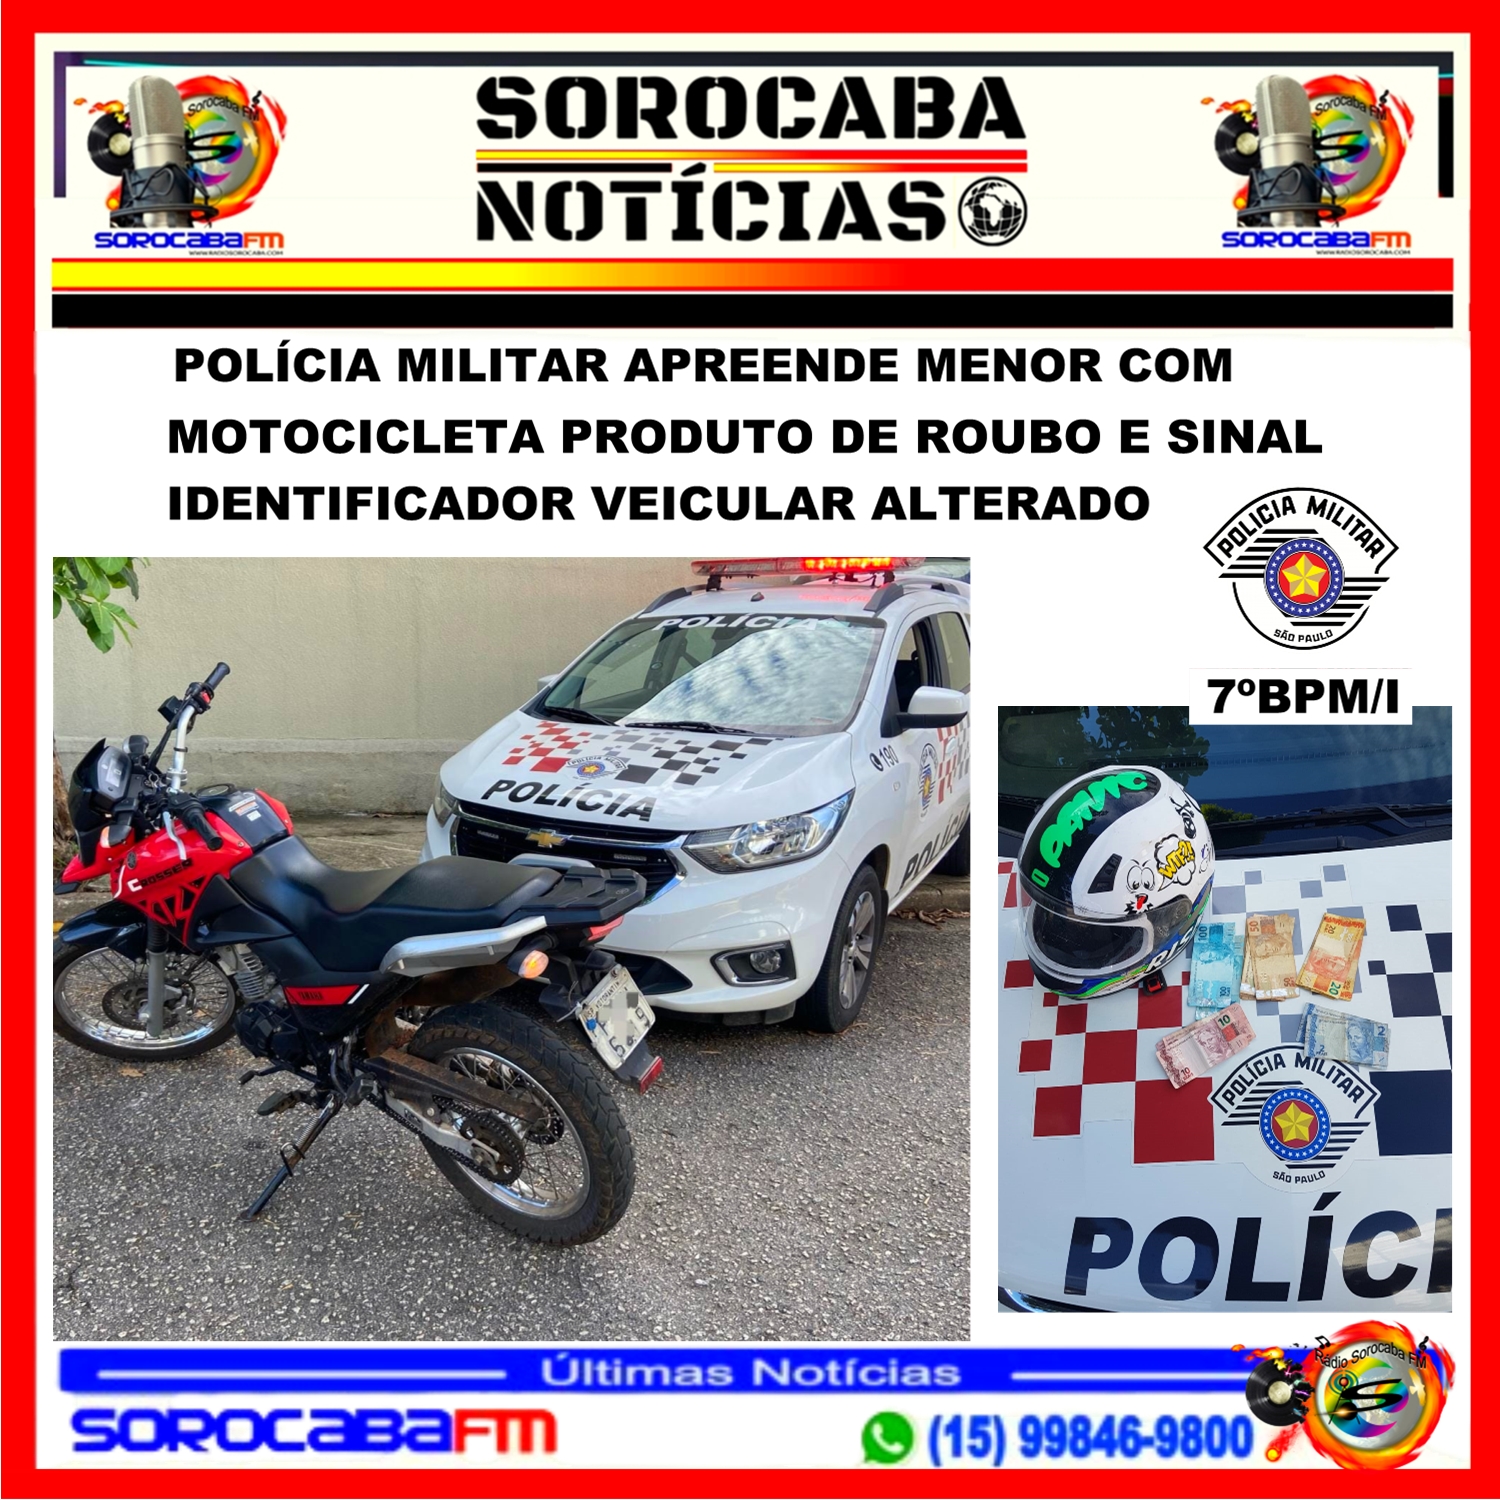 POLÍCIA MILITAR APREENDE MENOR COM MOTOCICLETA PRODUTO DE ROUBO E SINAL IDENTIFICADOR VEICULAR ALTERADO